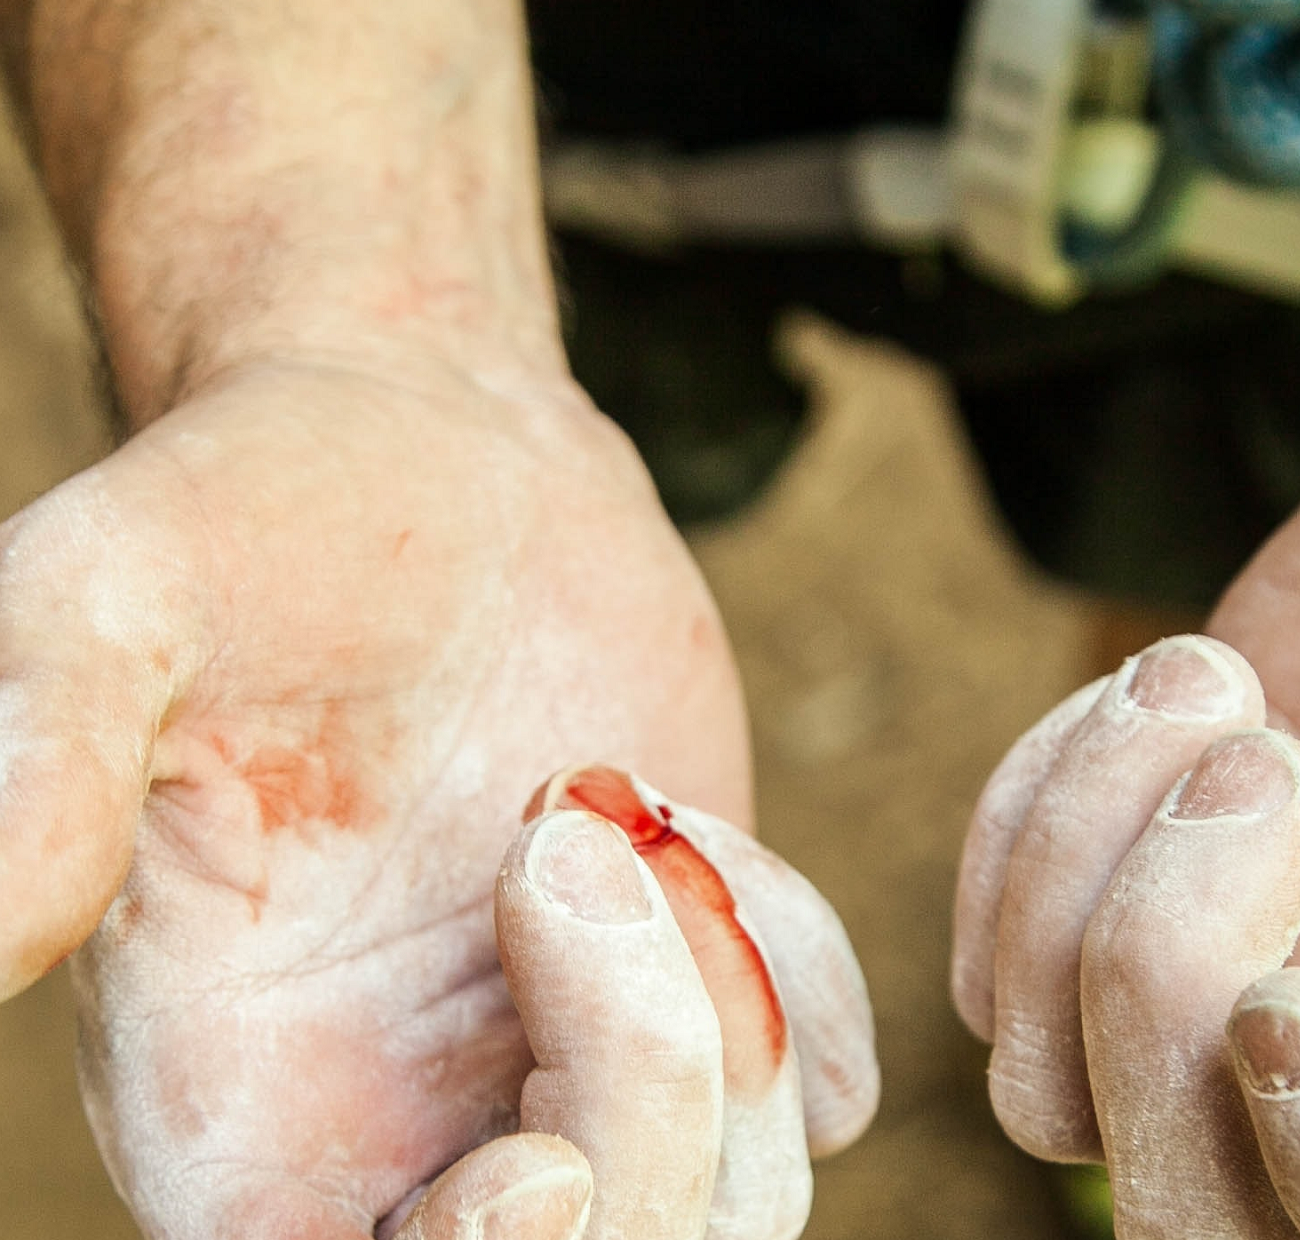 A man shows a bleeding hand